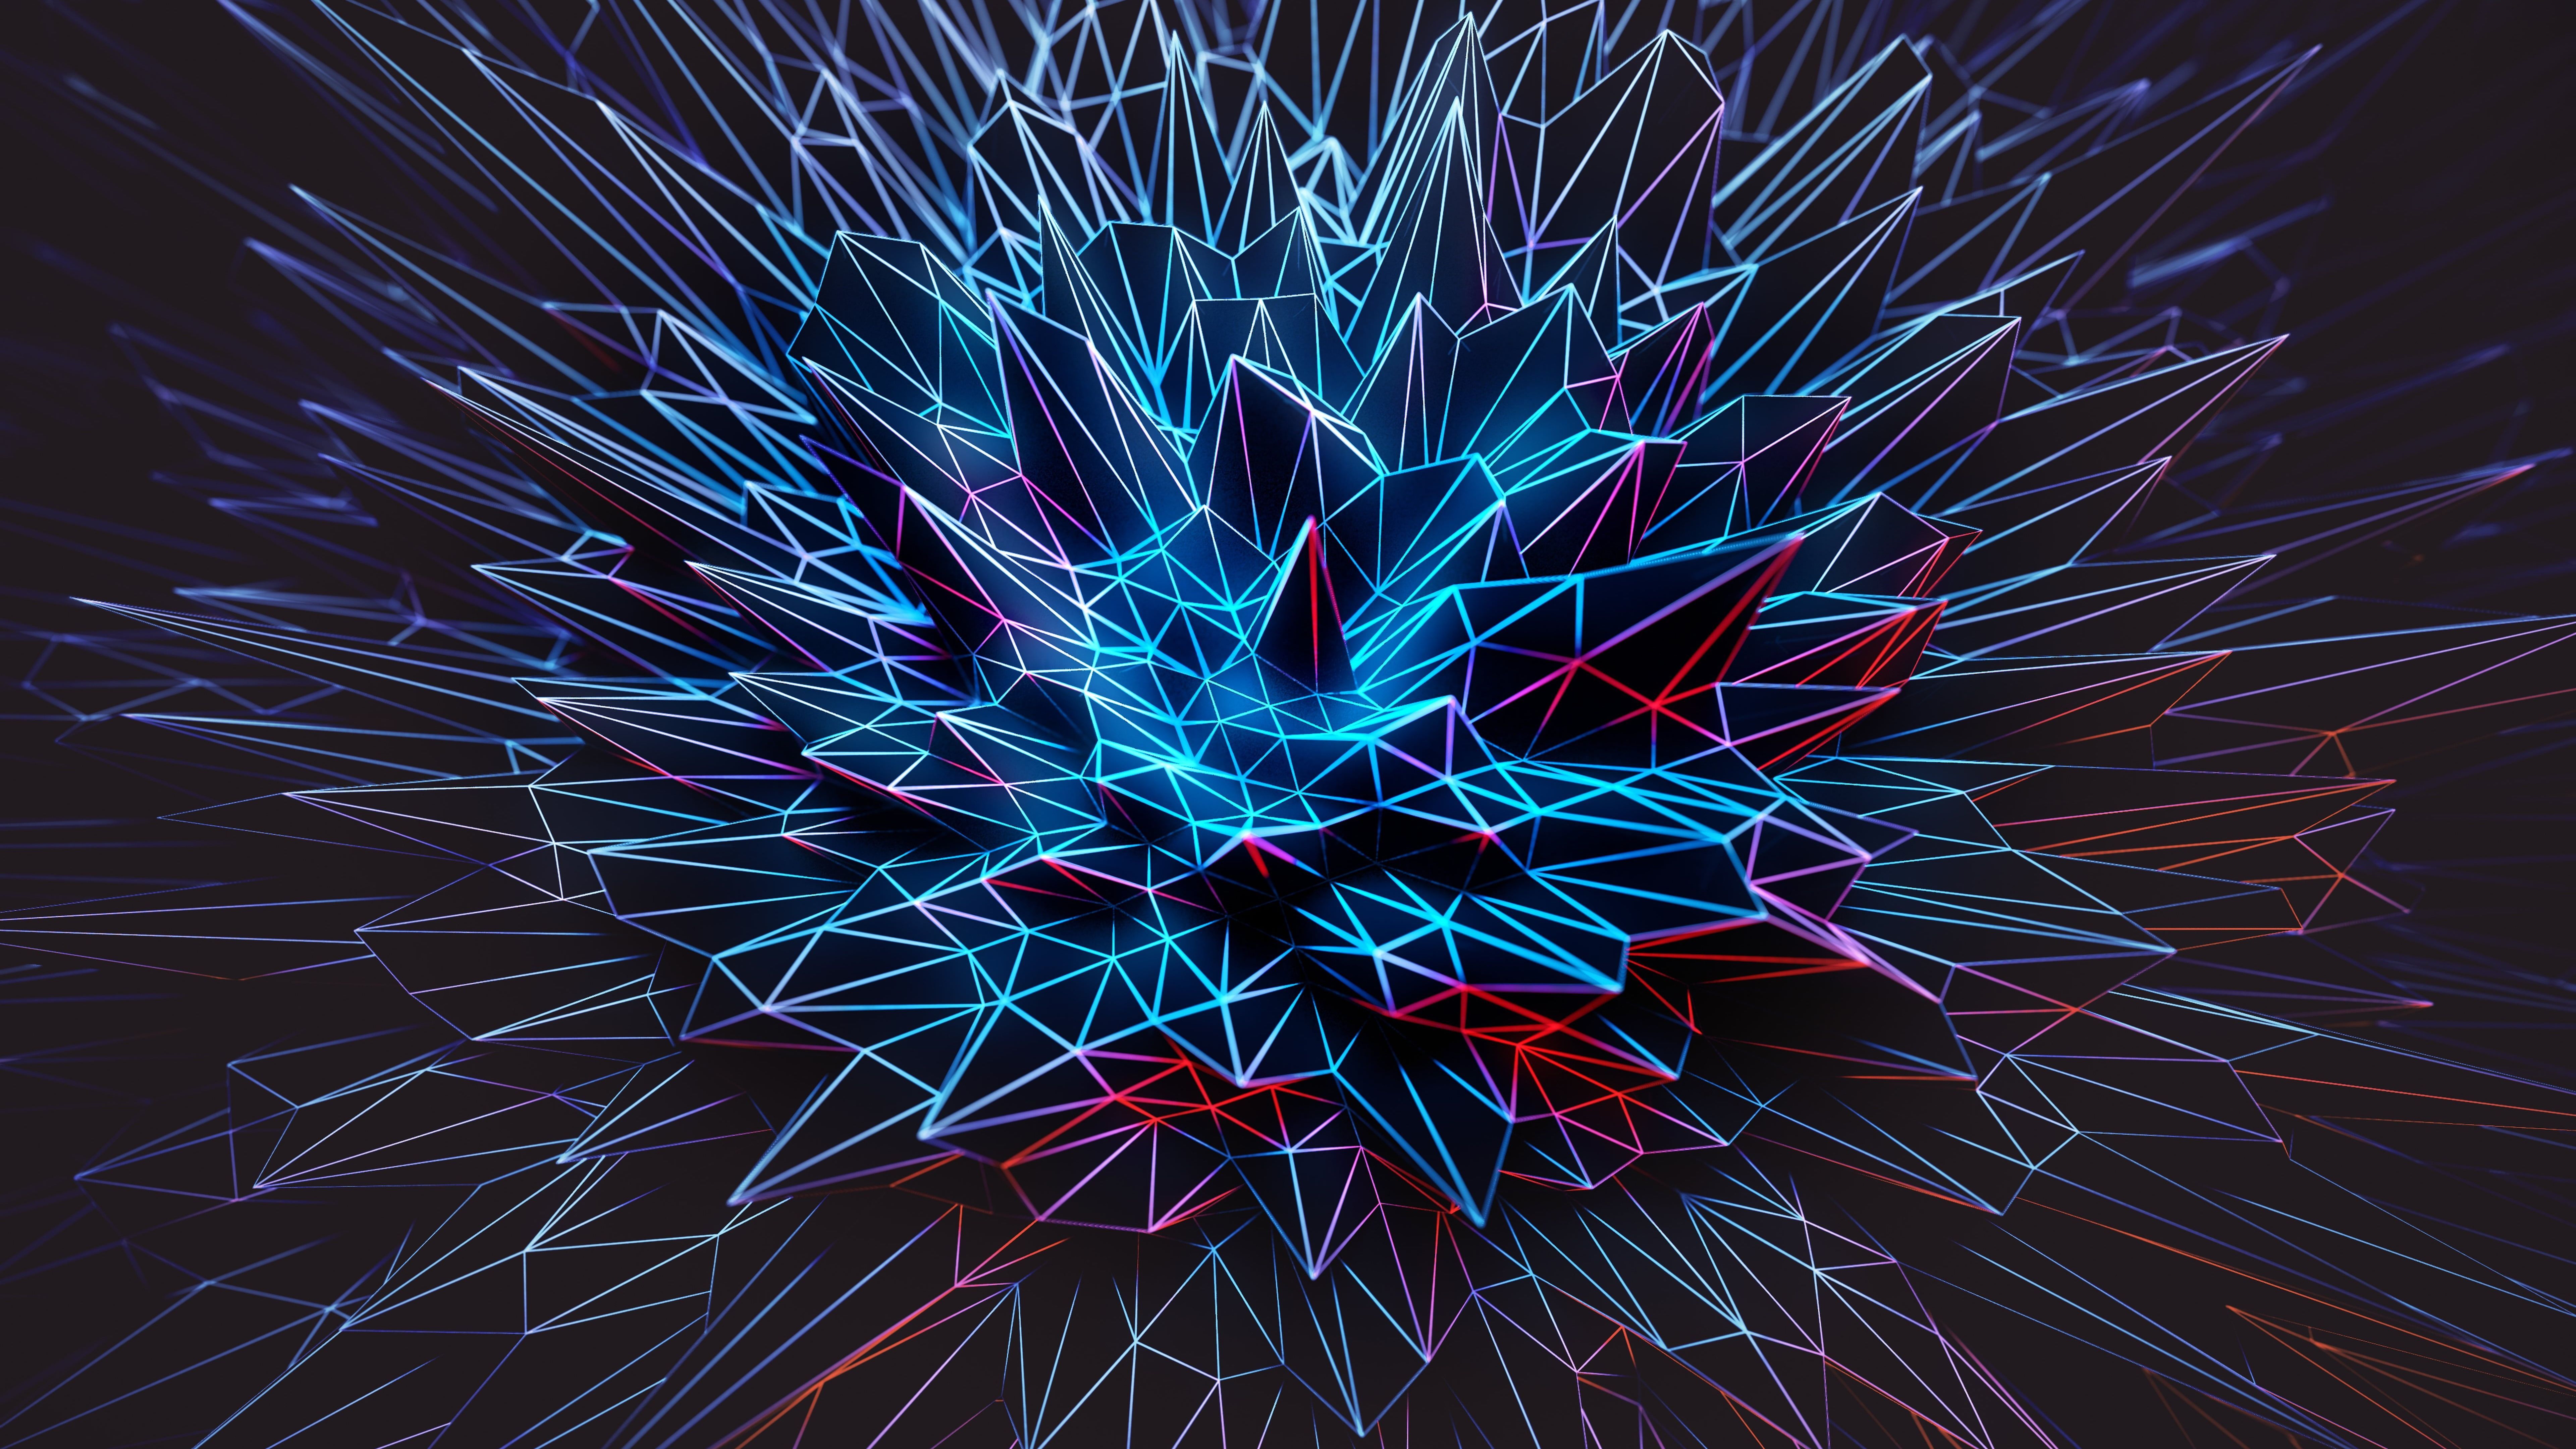 8k uhd d digital art abstract art k #polygonal #spike #spikes #blue electric blue #darkness #graphics graphic de. Artistic wallpaper, Dark wallpaper, Abstract